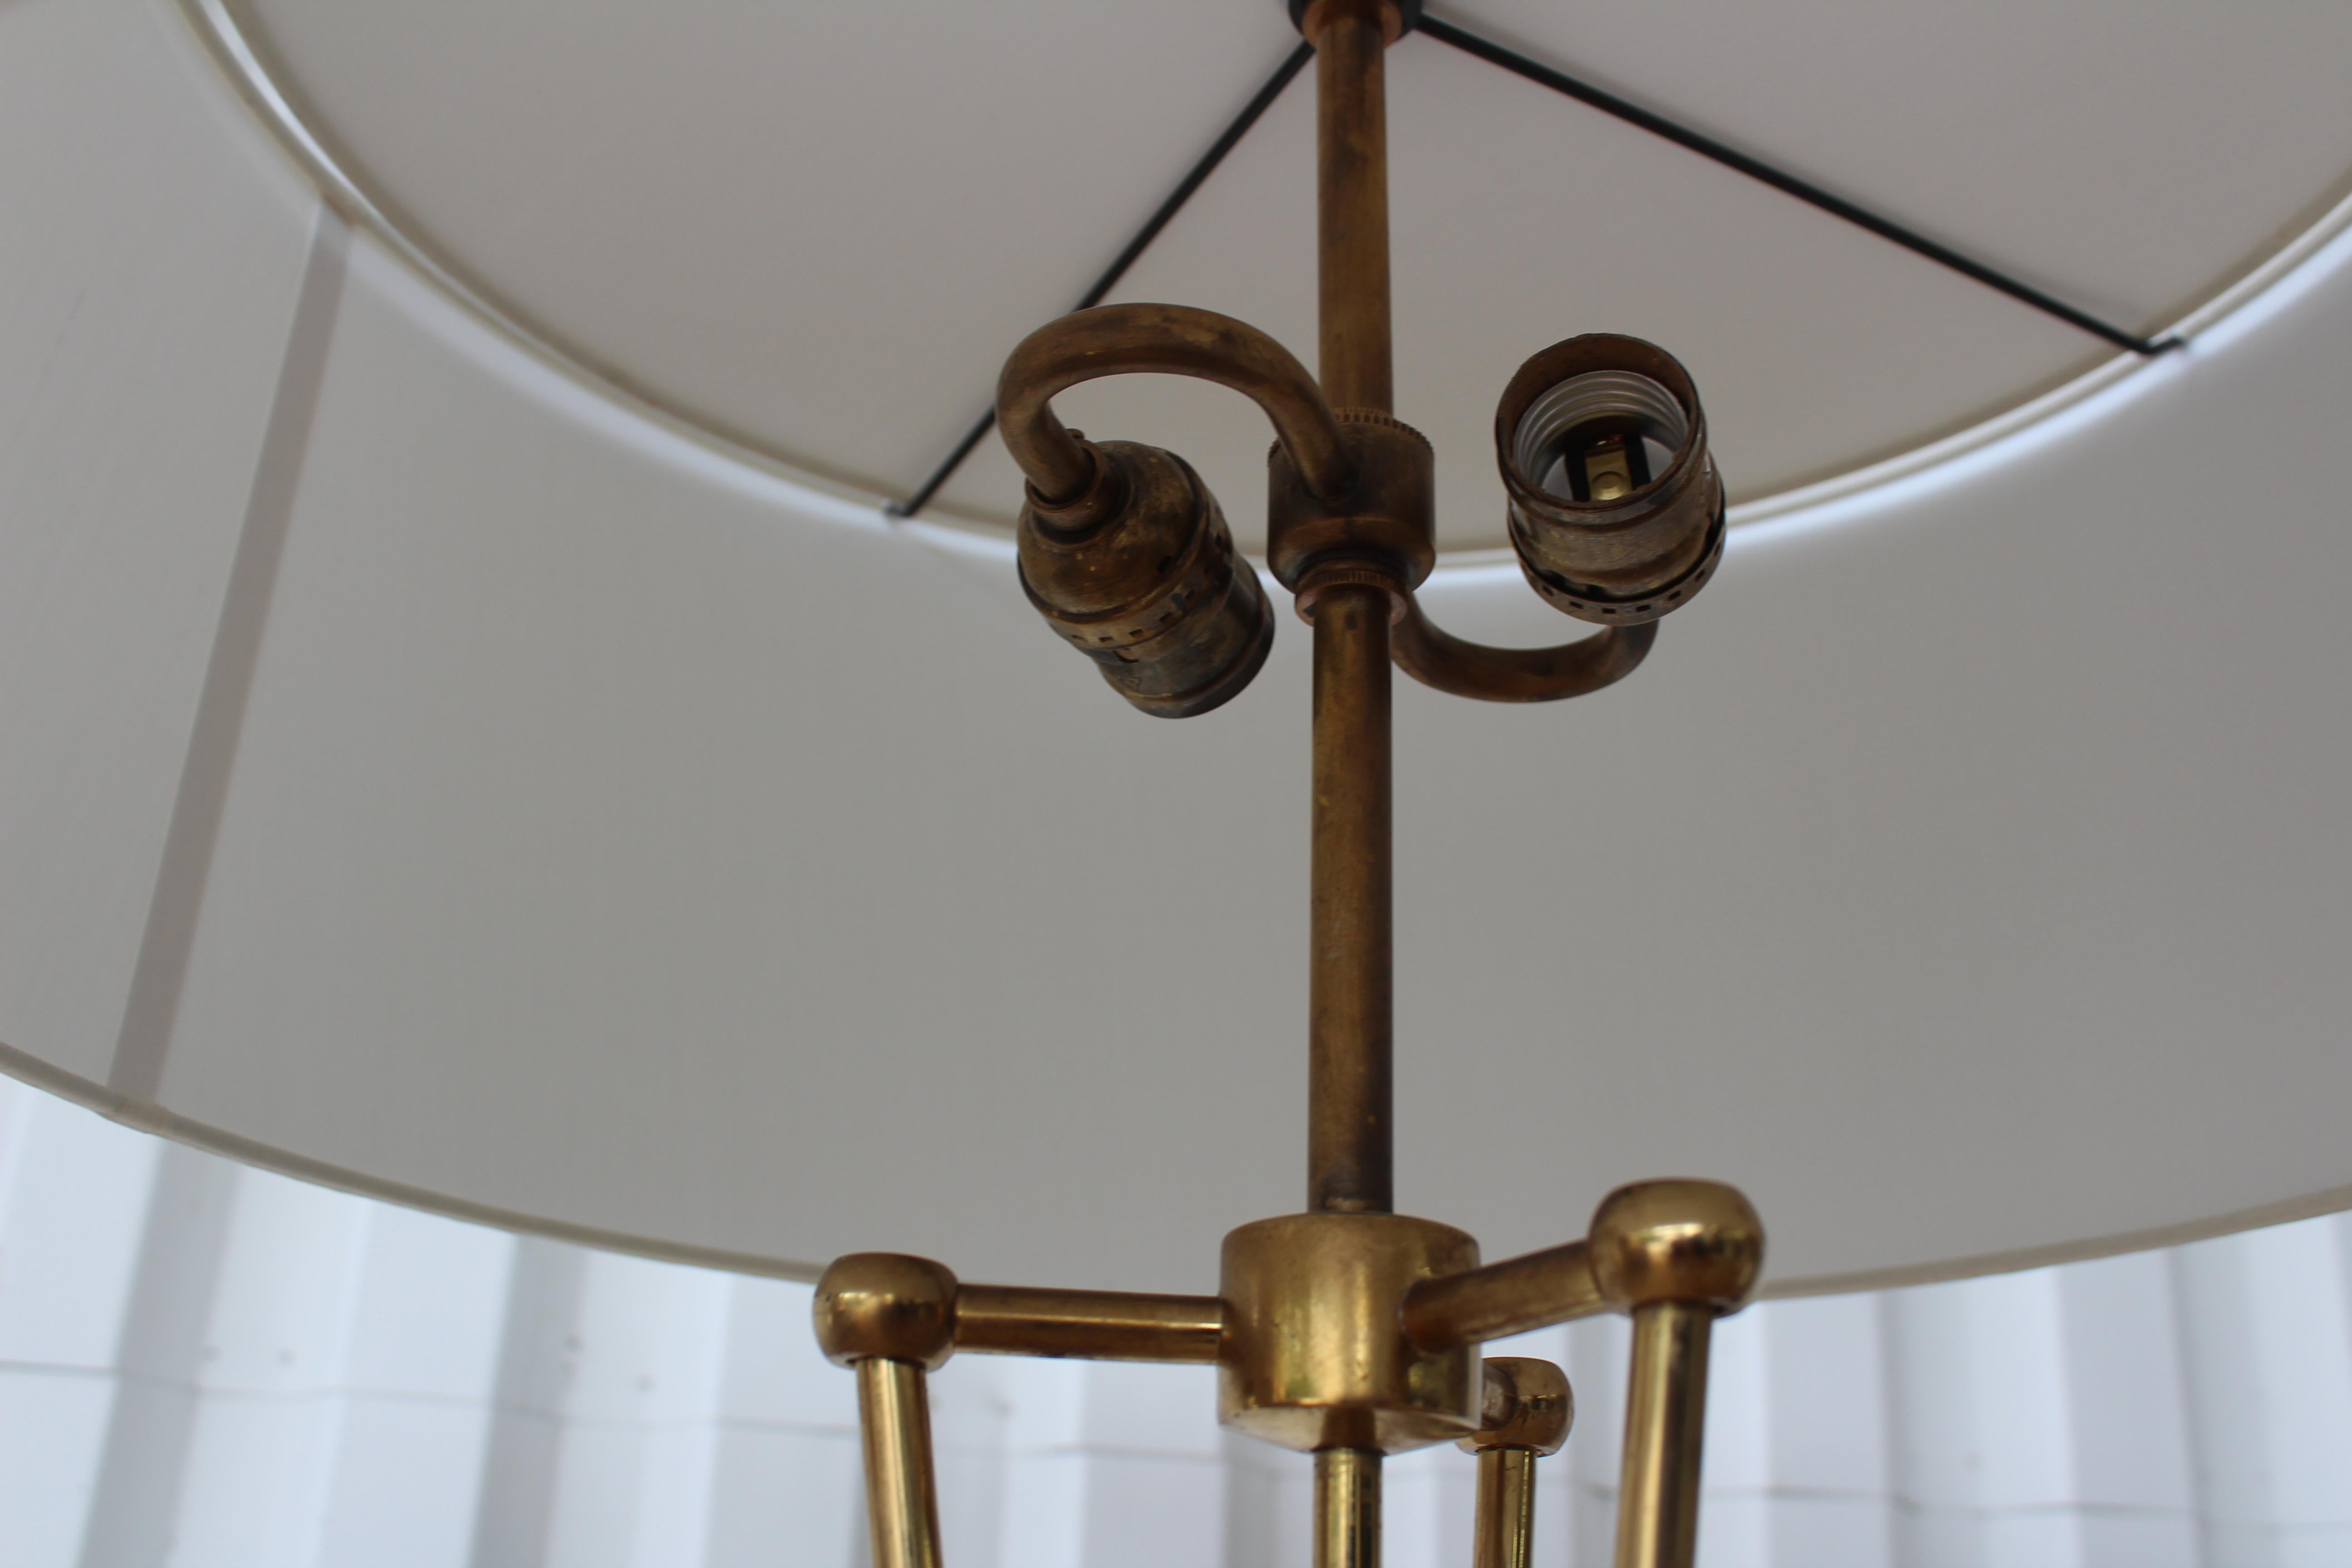 North American Mid-Century Brass Floor Lamp by T.H. Robjon Gibbings, U.S.A, 1950s.